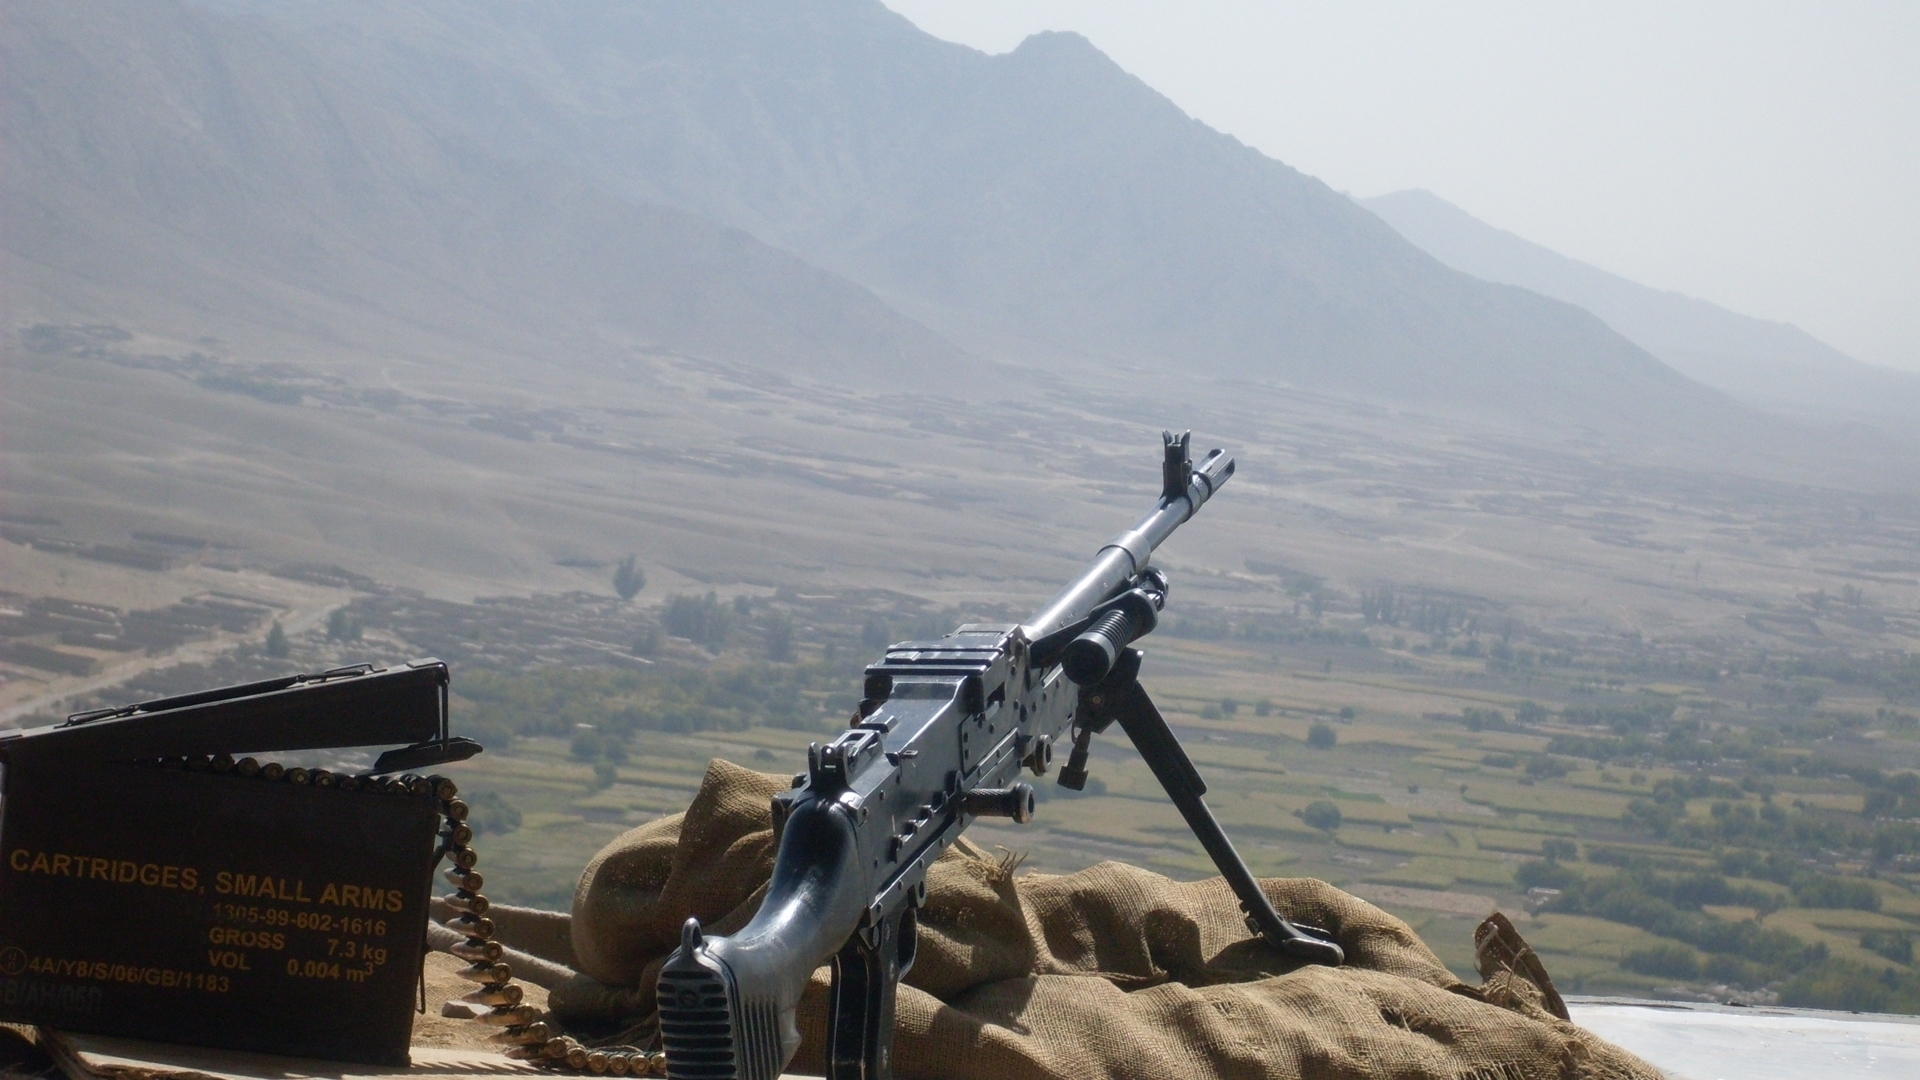 General 1920x1080 M240 War in Afghanistan military gun landscape ammunition